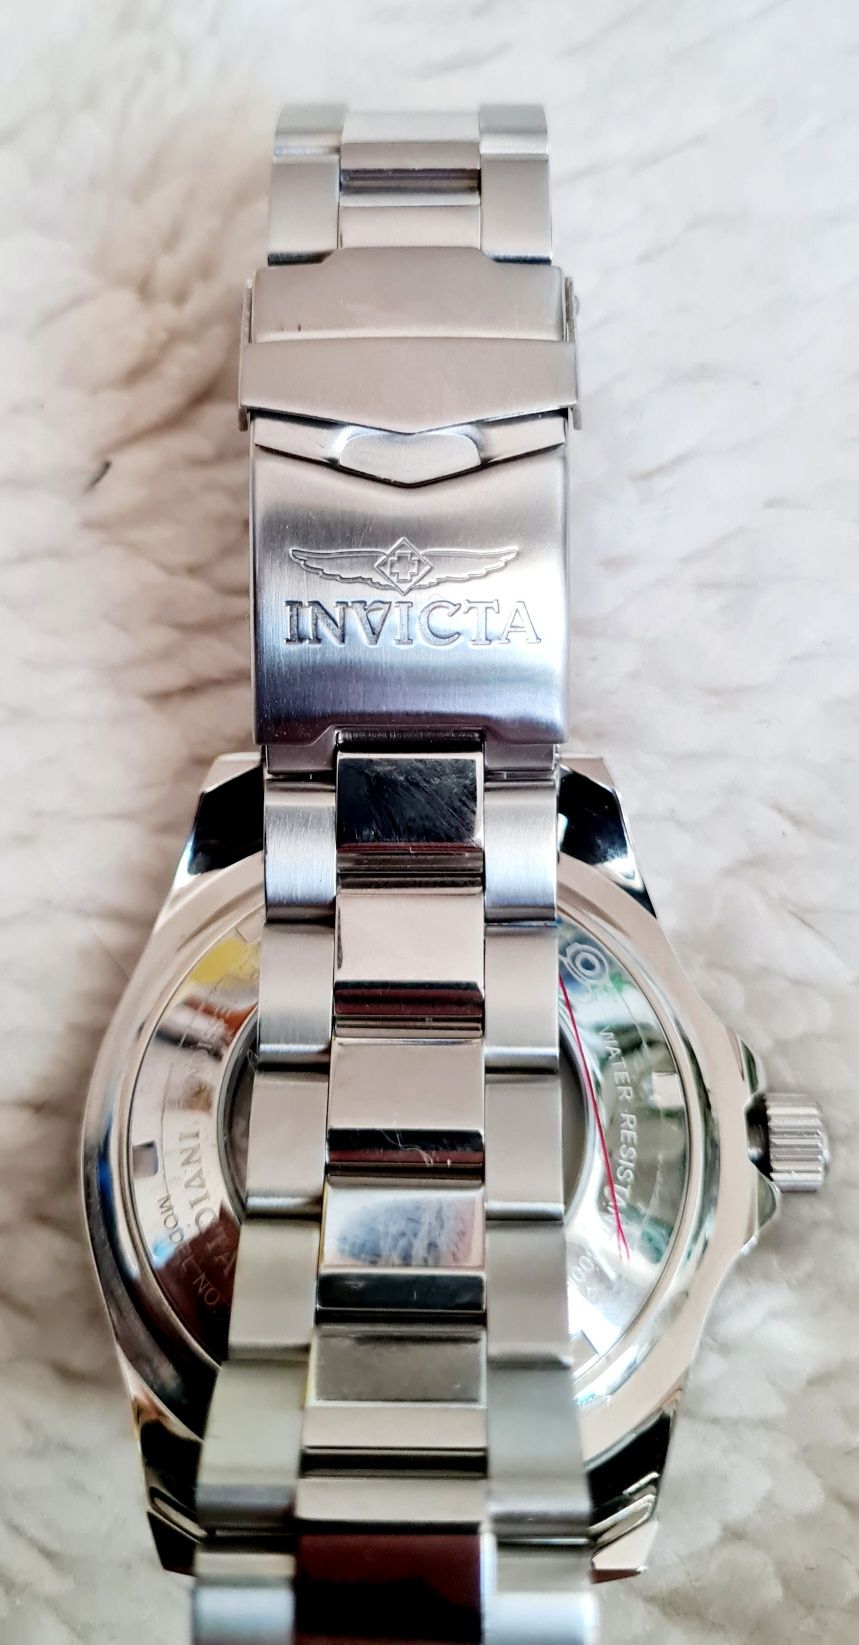 Часы Invicta grand diver